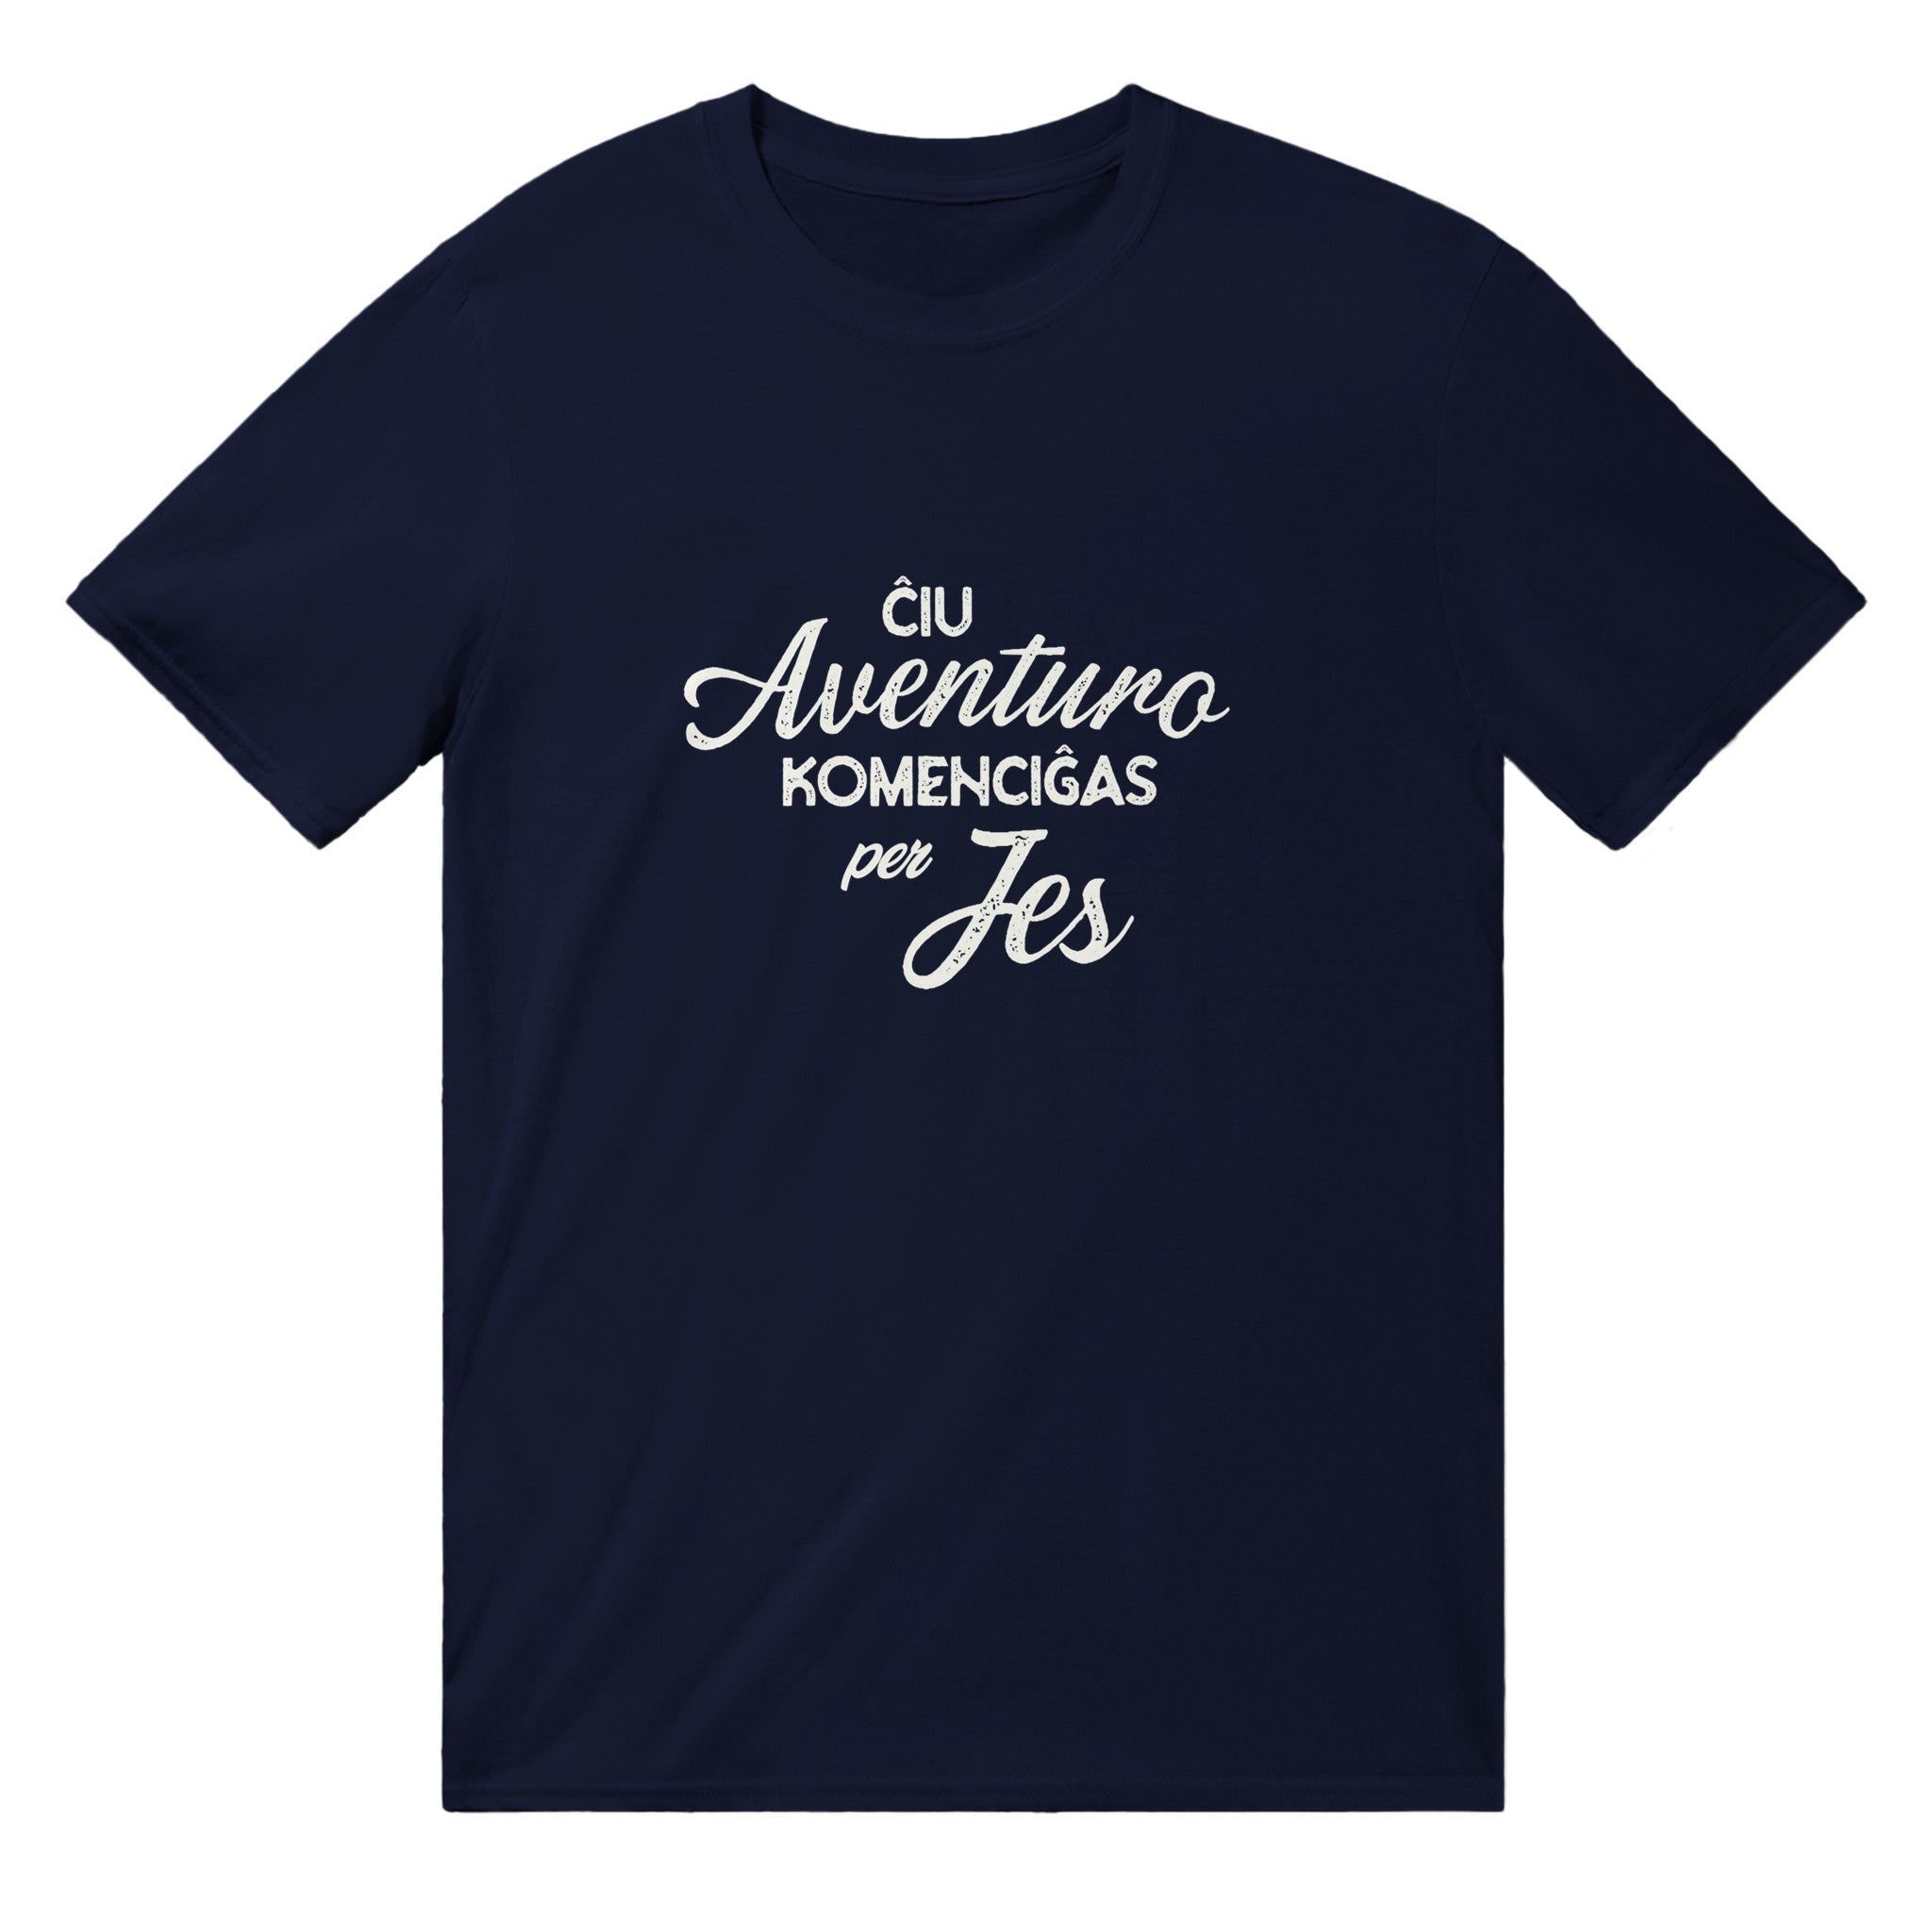 Ĉiu Aventuro Unisex T-shirt